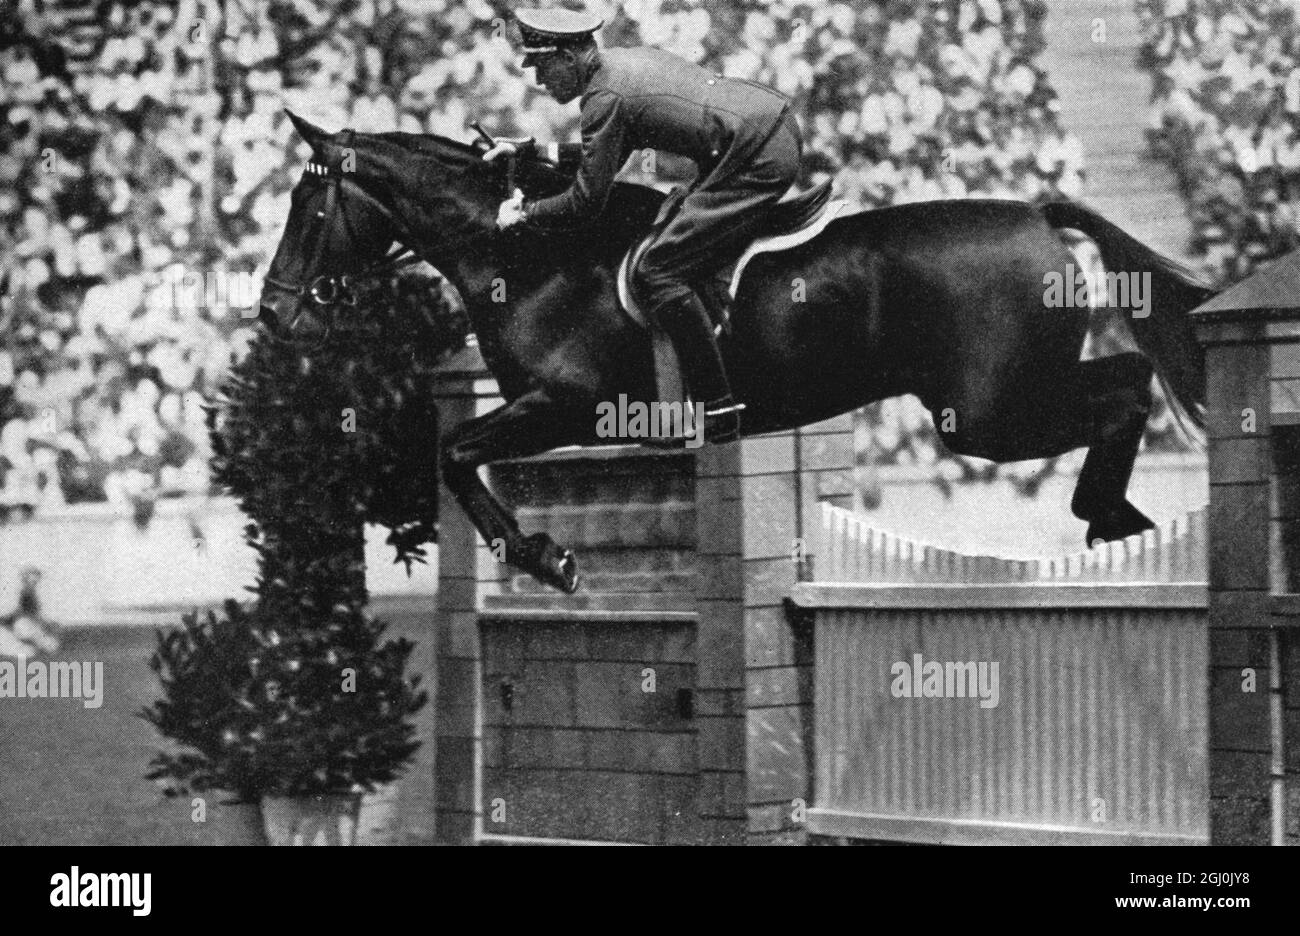 1936 Olympics, Berlin - Riding - Captain Ludwig Stubbendorff won a gold medal in the eventing team (showjumping) on ''Nurmi''. (Hauptmann Stubbendorff gewann die Goldmedaille in der Vielseitigkeitsprufung auf ''Nurmi'') ©TopFoto Stock Photo